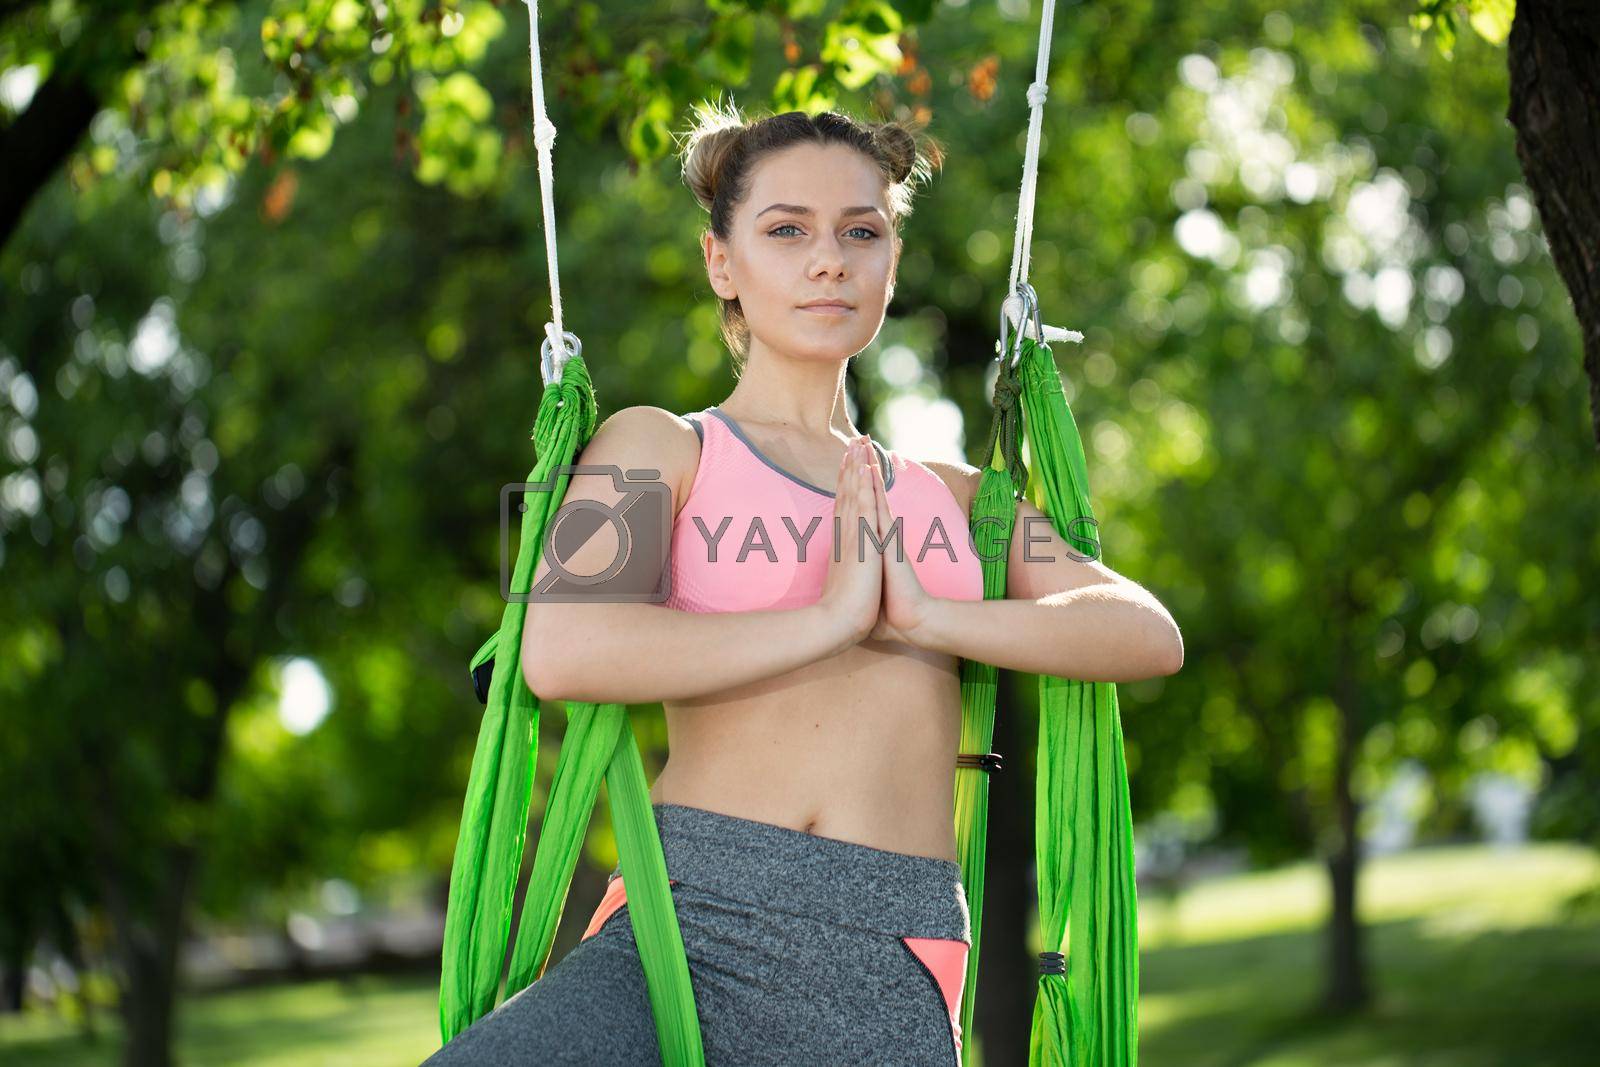 Anti-gravity Yoga, woman doing yoga exercises in the park